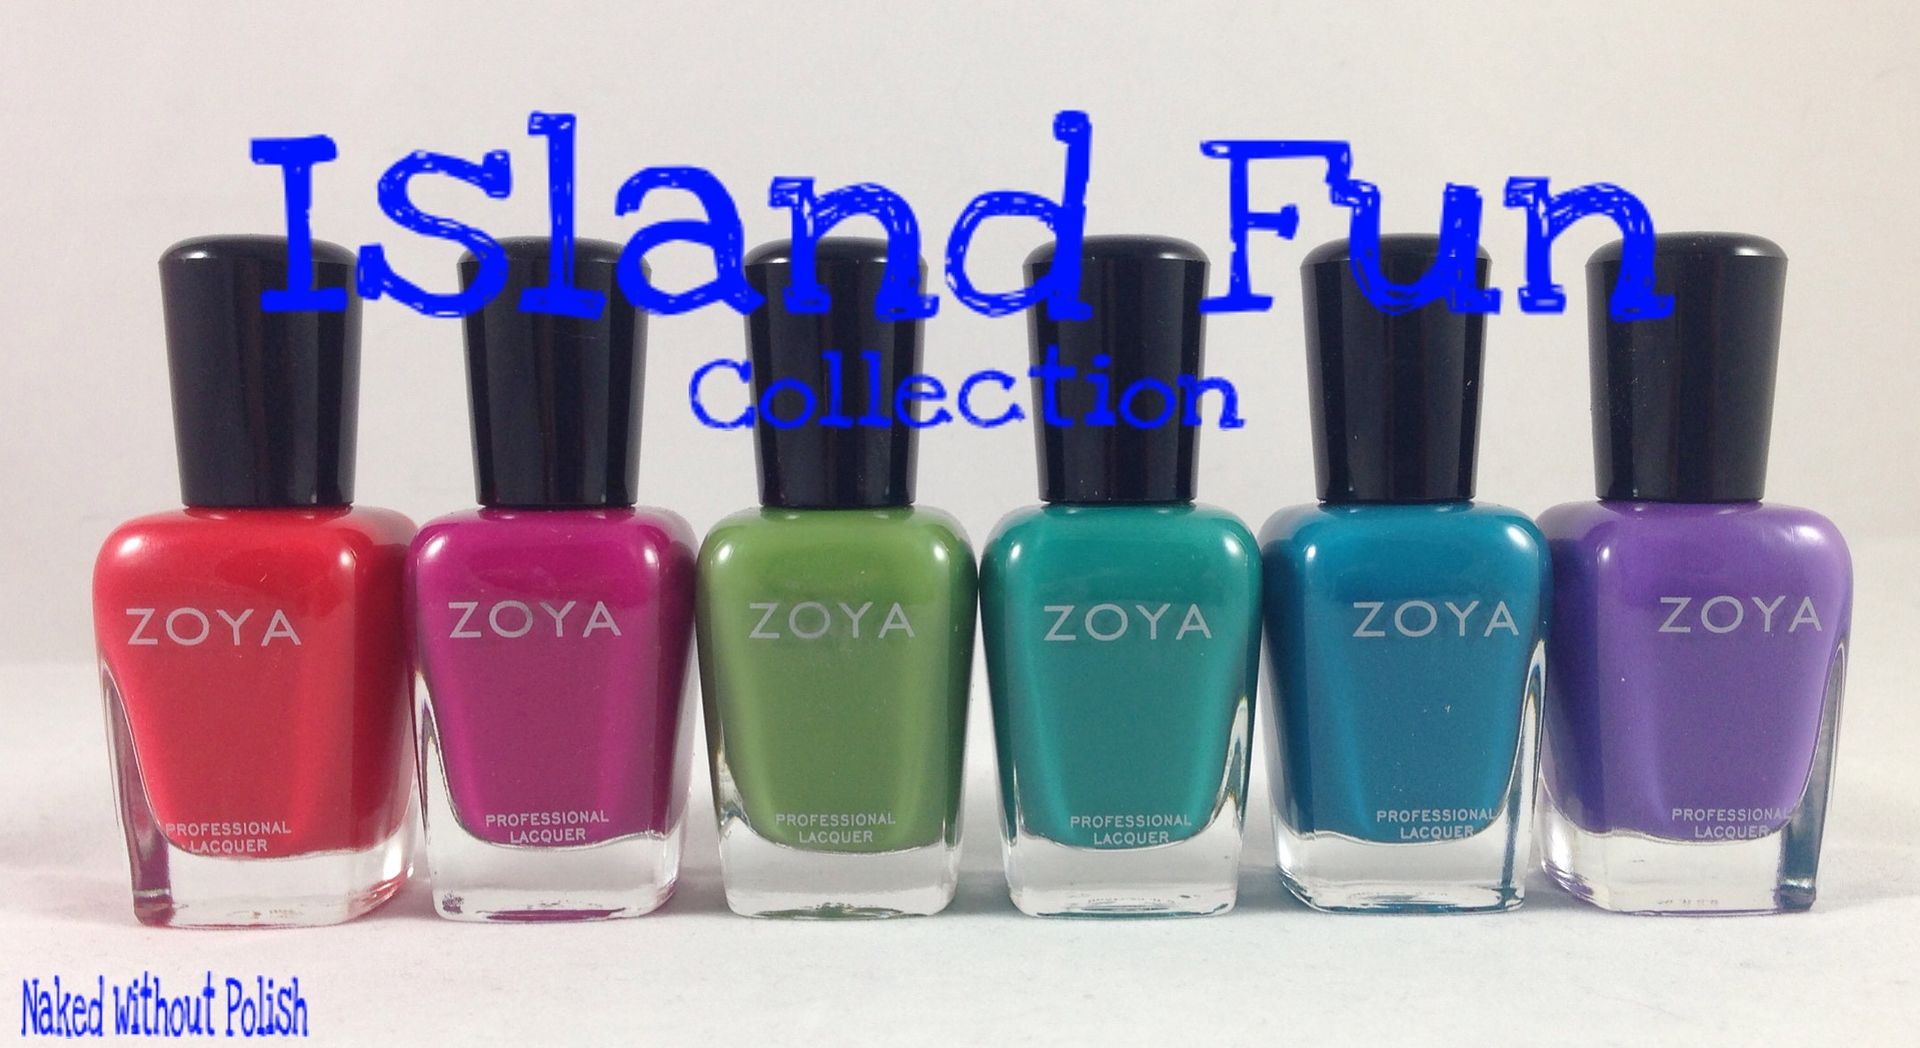 Zoya Nail Polish in "Island Fun Collection" - wide 2